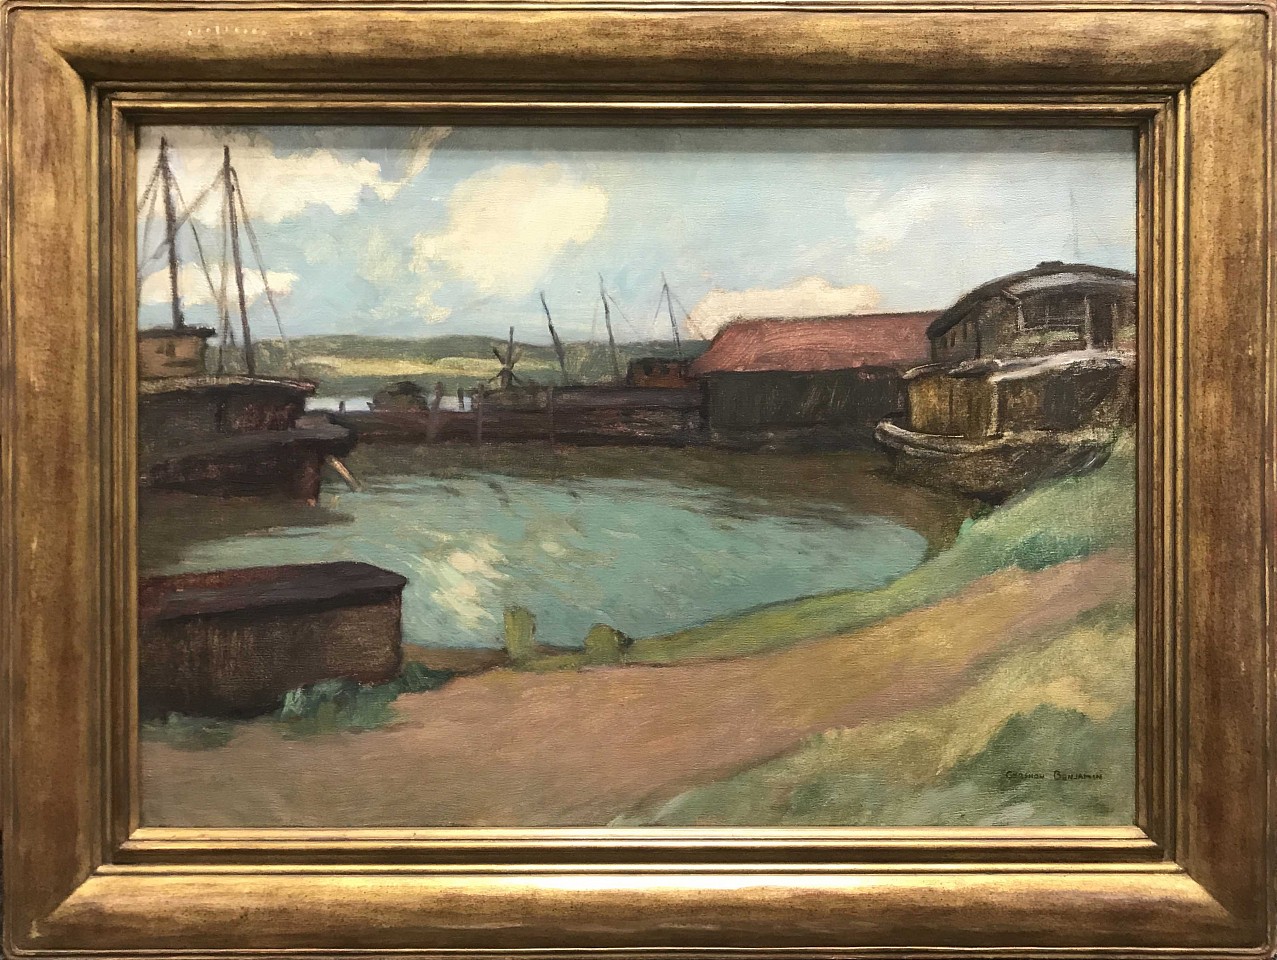 Gershon Benjamin, Gloucester Pier #1, 1930
oil on canvas, 22 x 30 in. (55.9 x 76.2 cm)
GB1803025